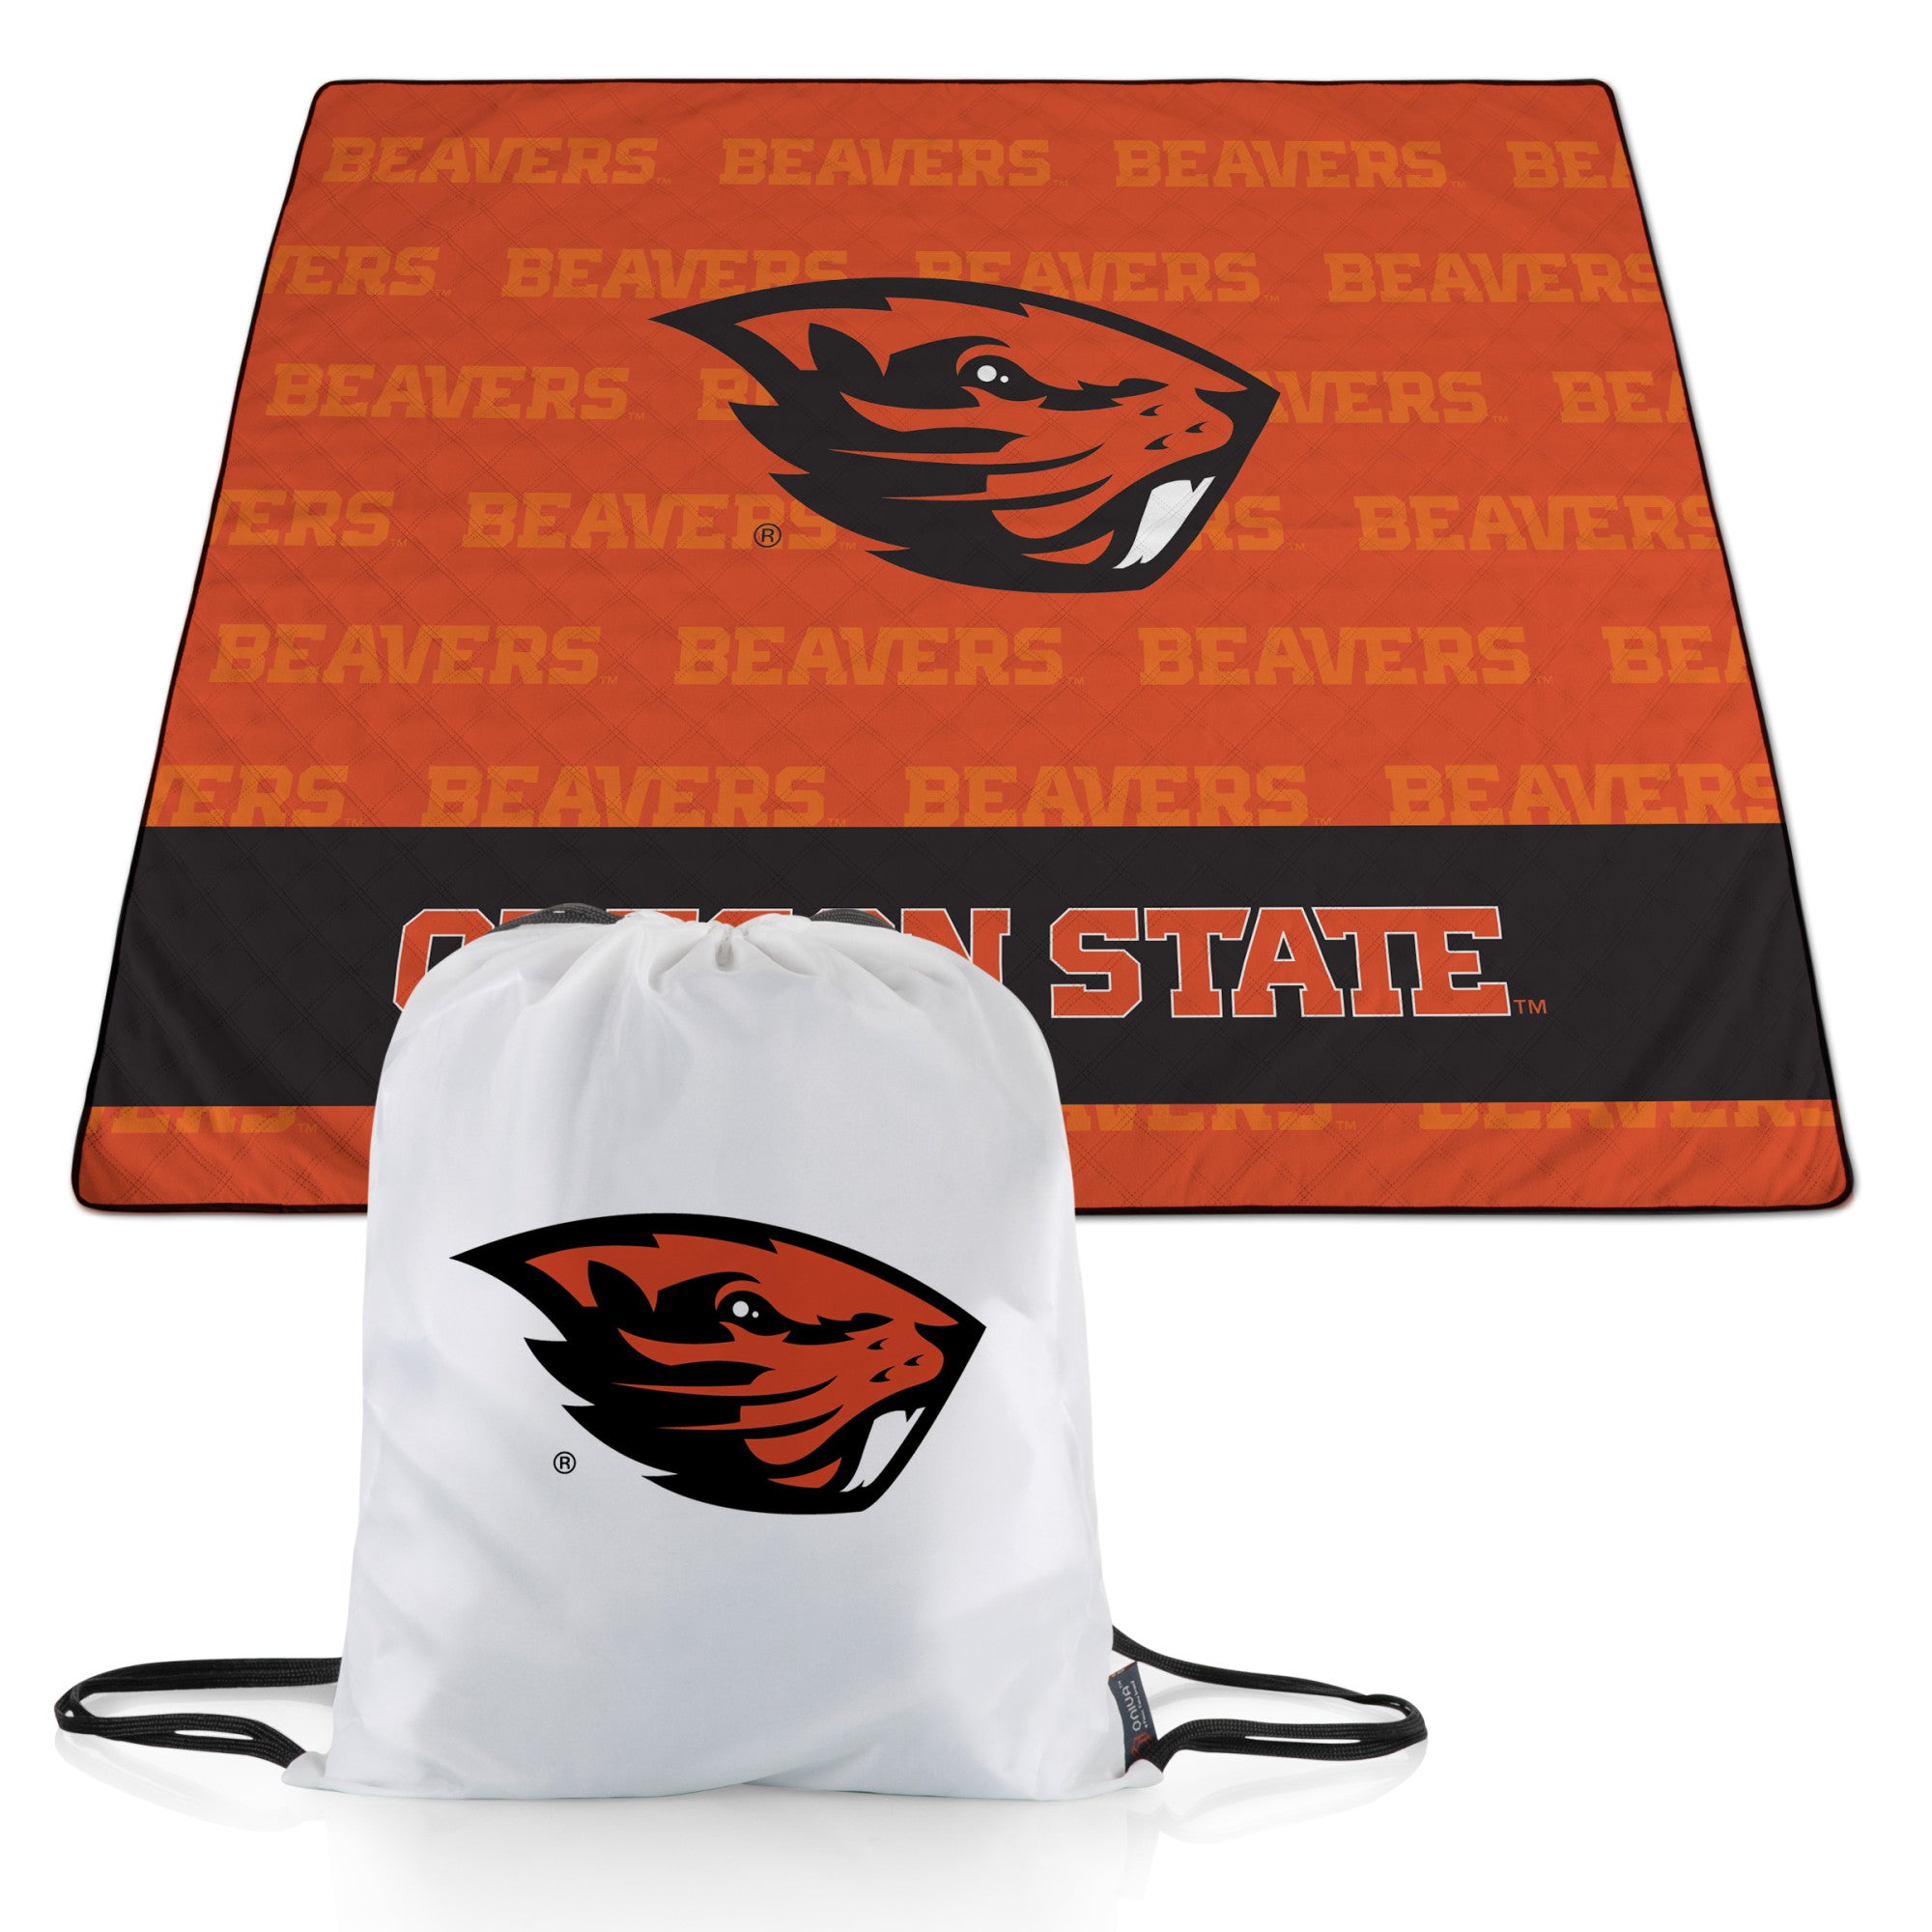 Oregon State Beavers - Impresa Picnic Blanket